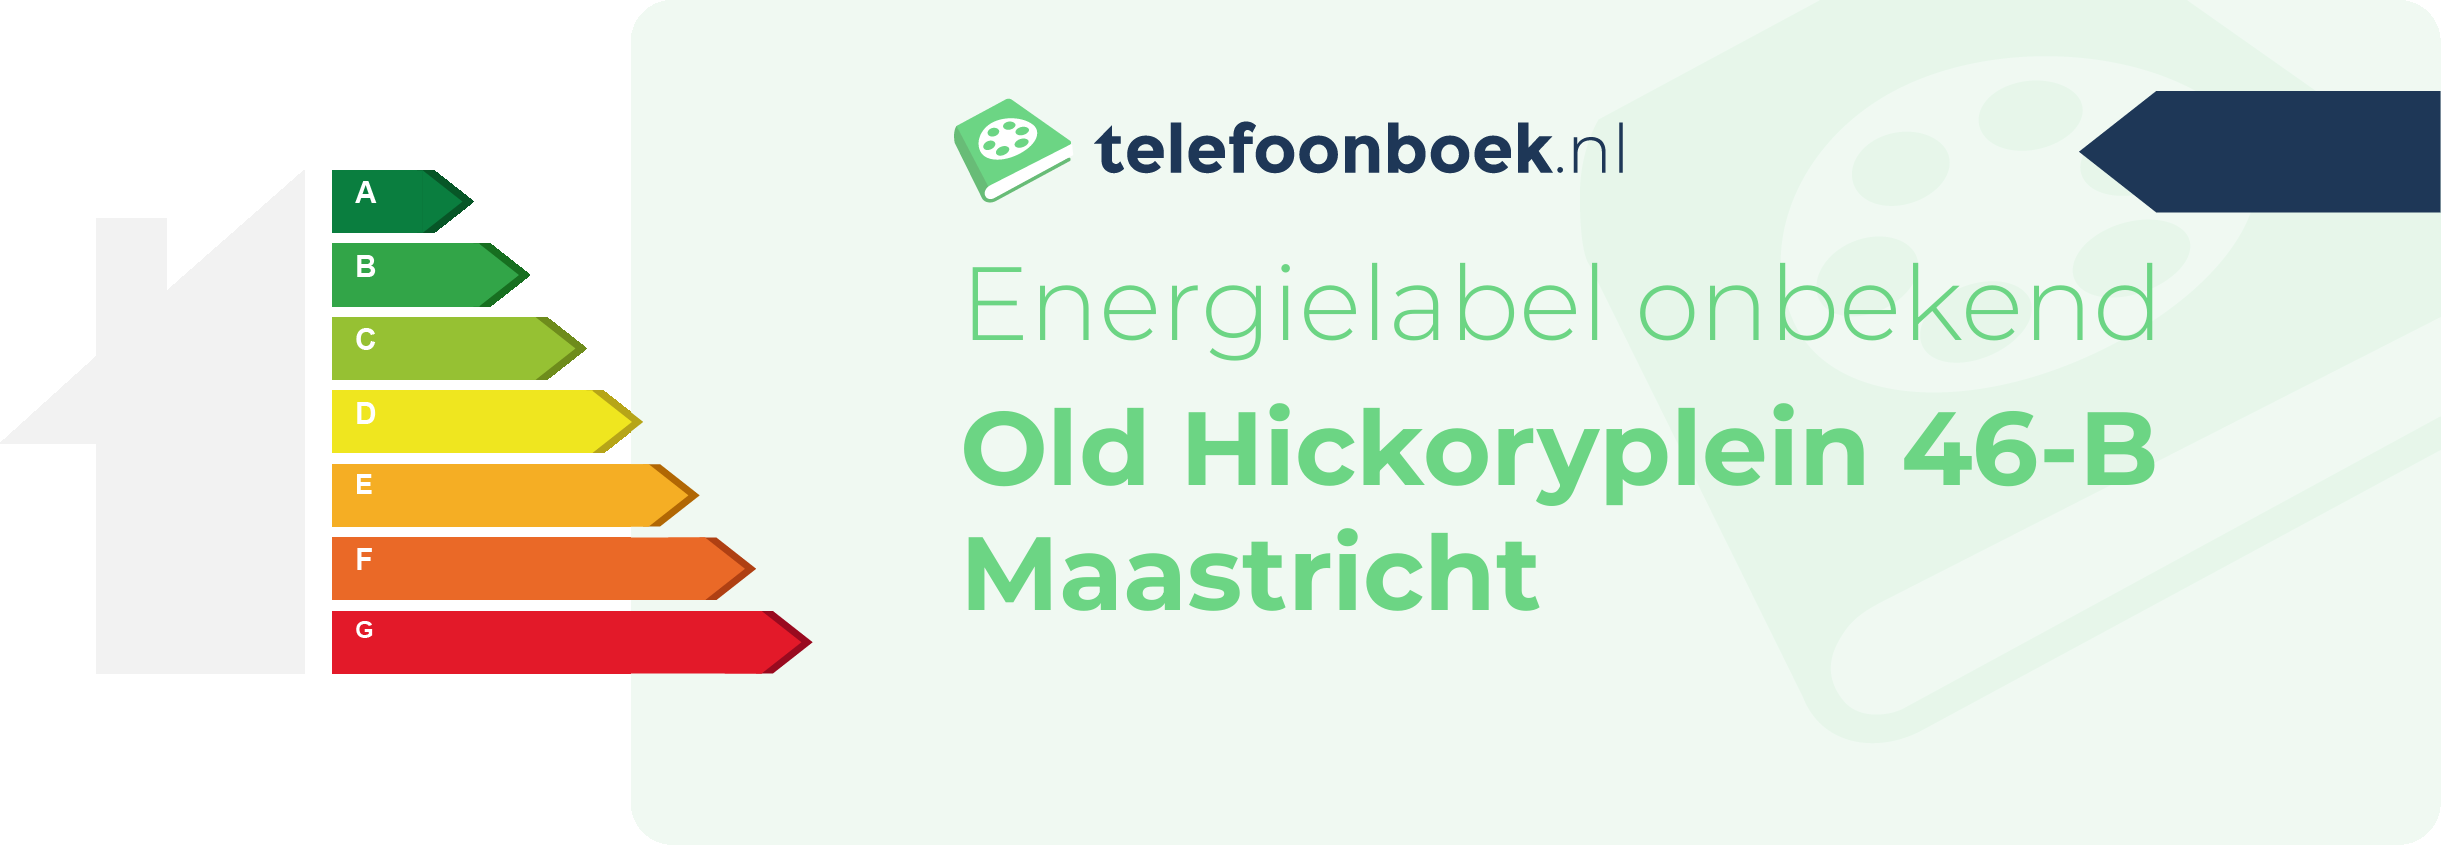 Energielabel Old Hickoryplein 46-B Maastricht